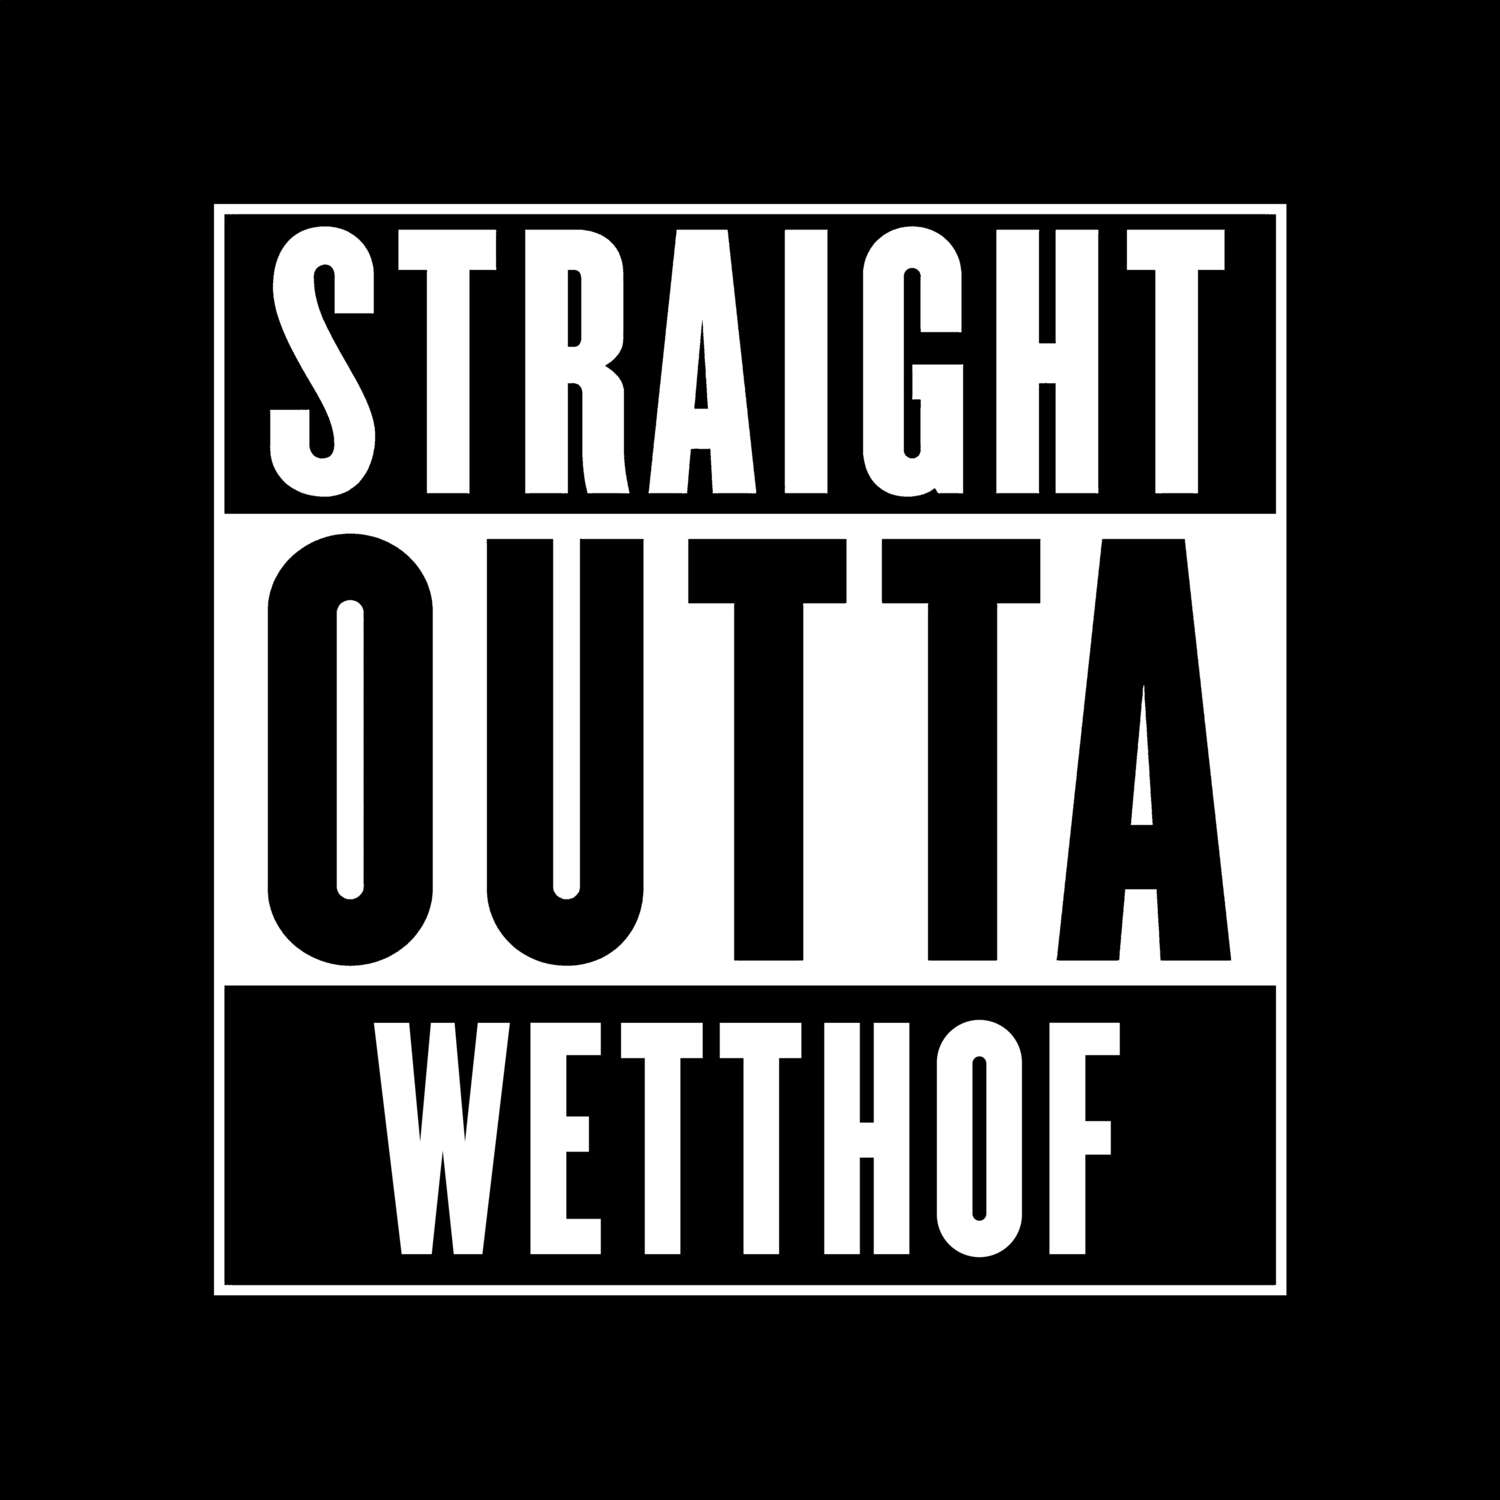 Wetthof T-Shirt »Straight Outta«